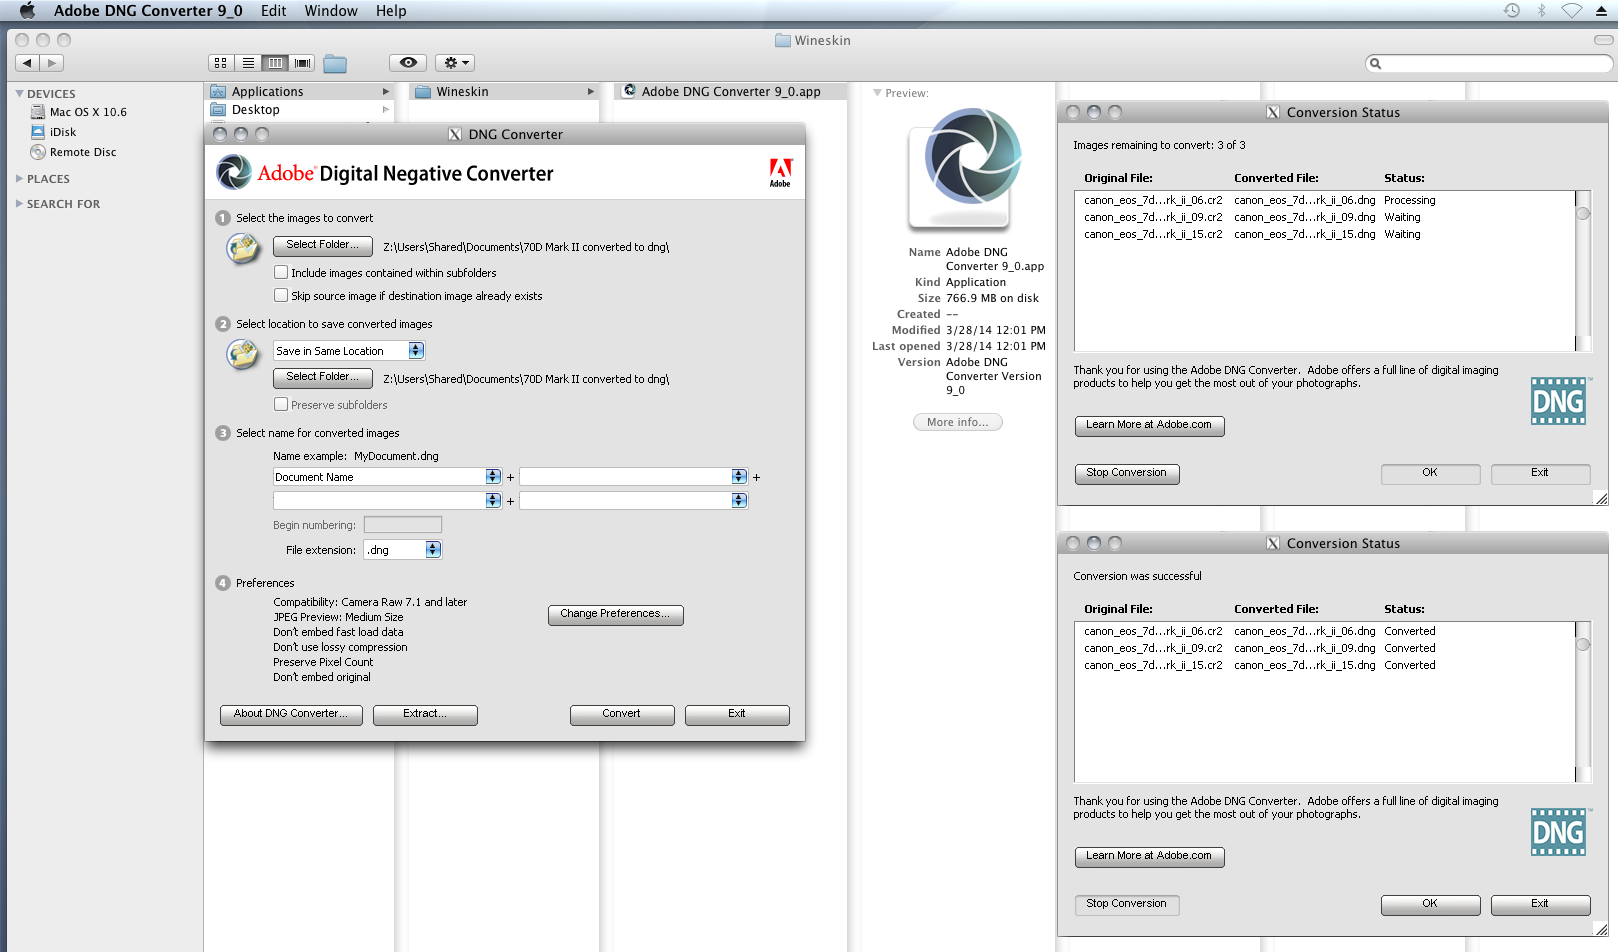 adobe dng converter for mac 10.6.8